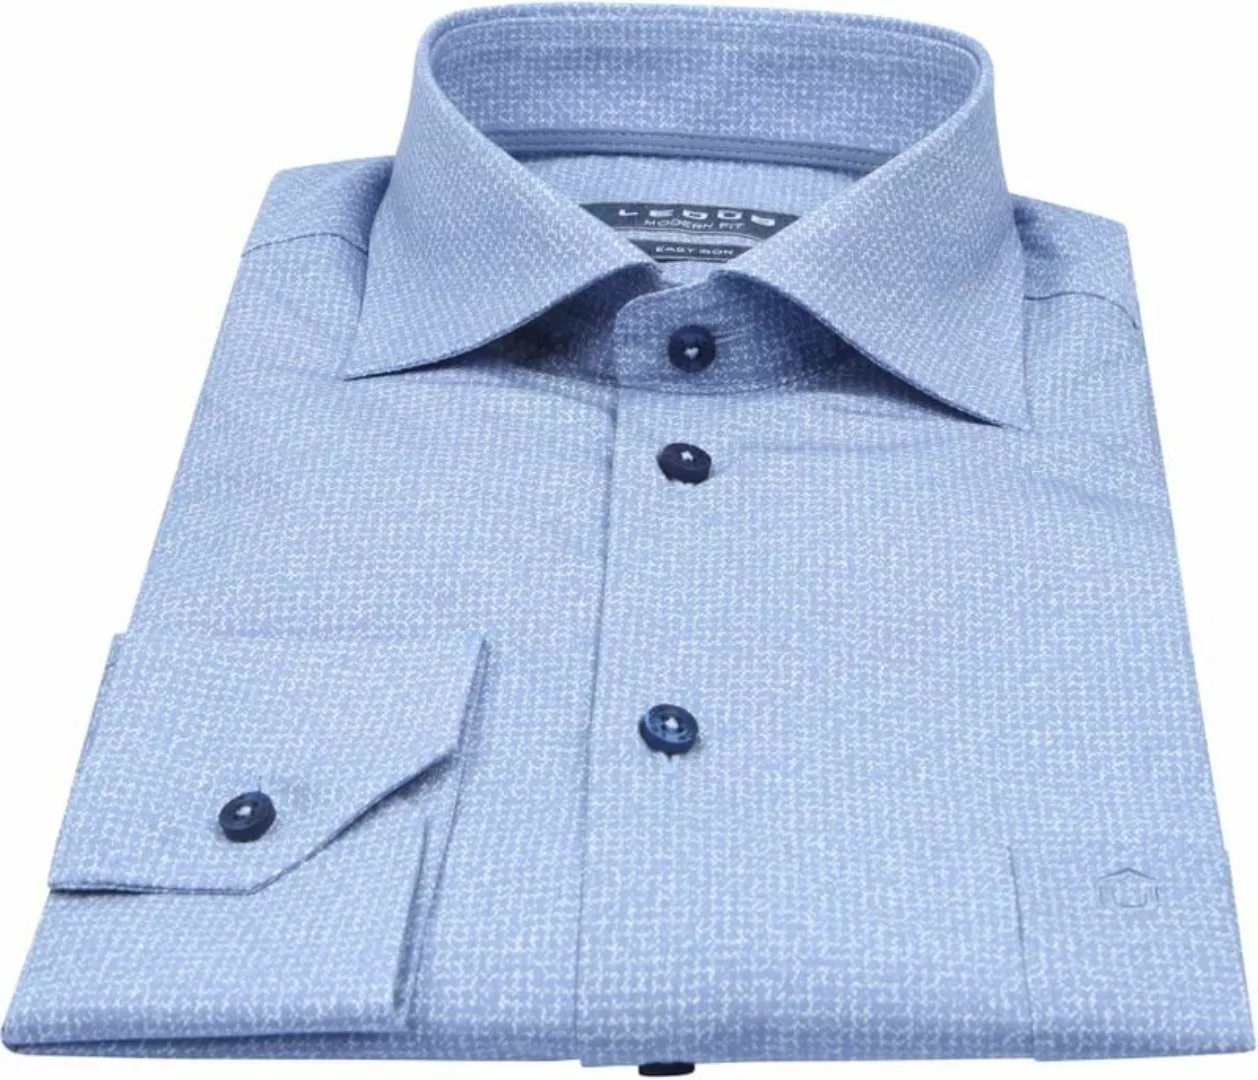 Ledub Shirt Druck Blau - Größe 43 günstig online kaufen